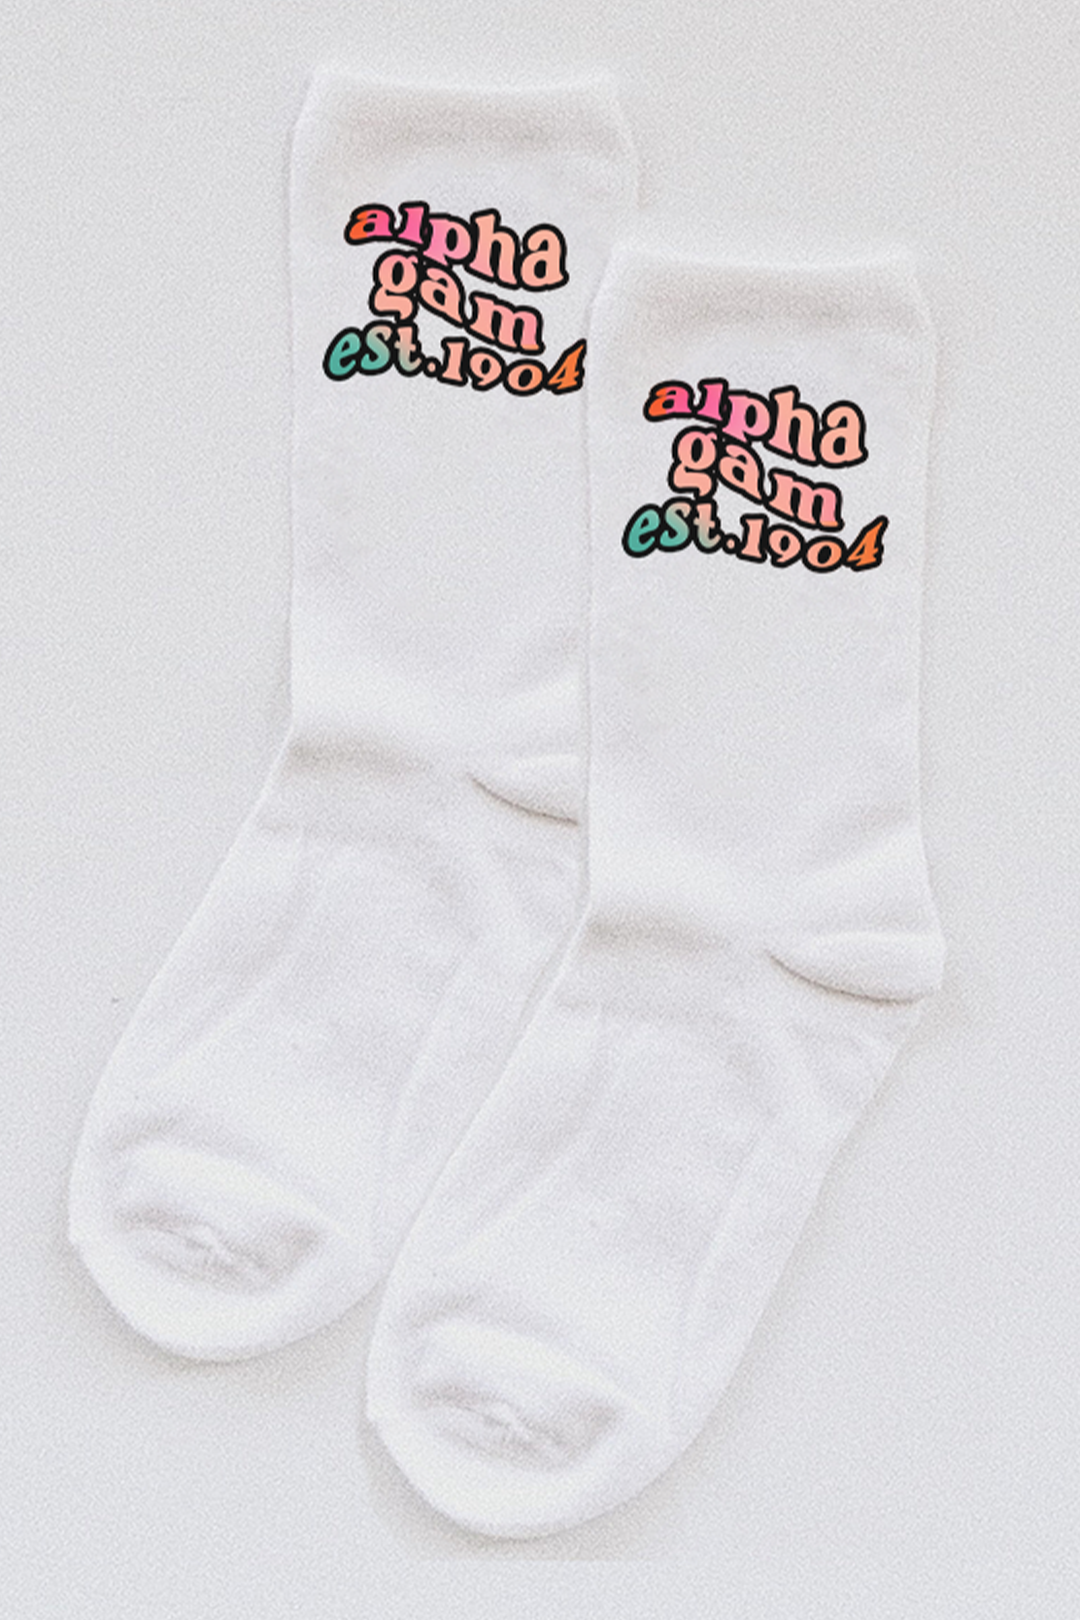 Gradient socks - Alpha Gam